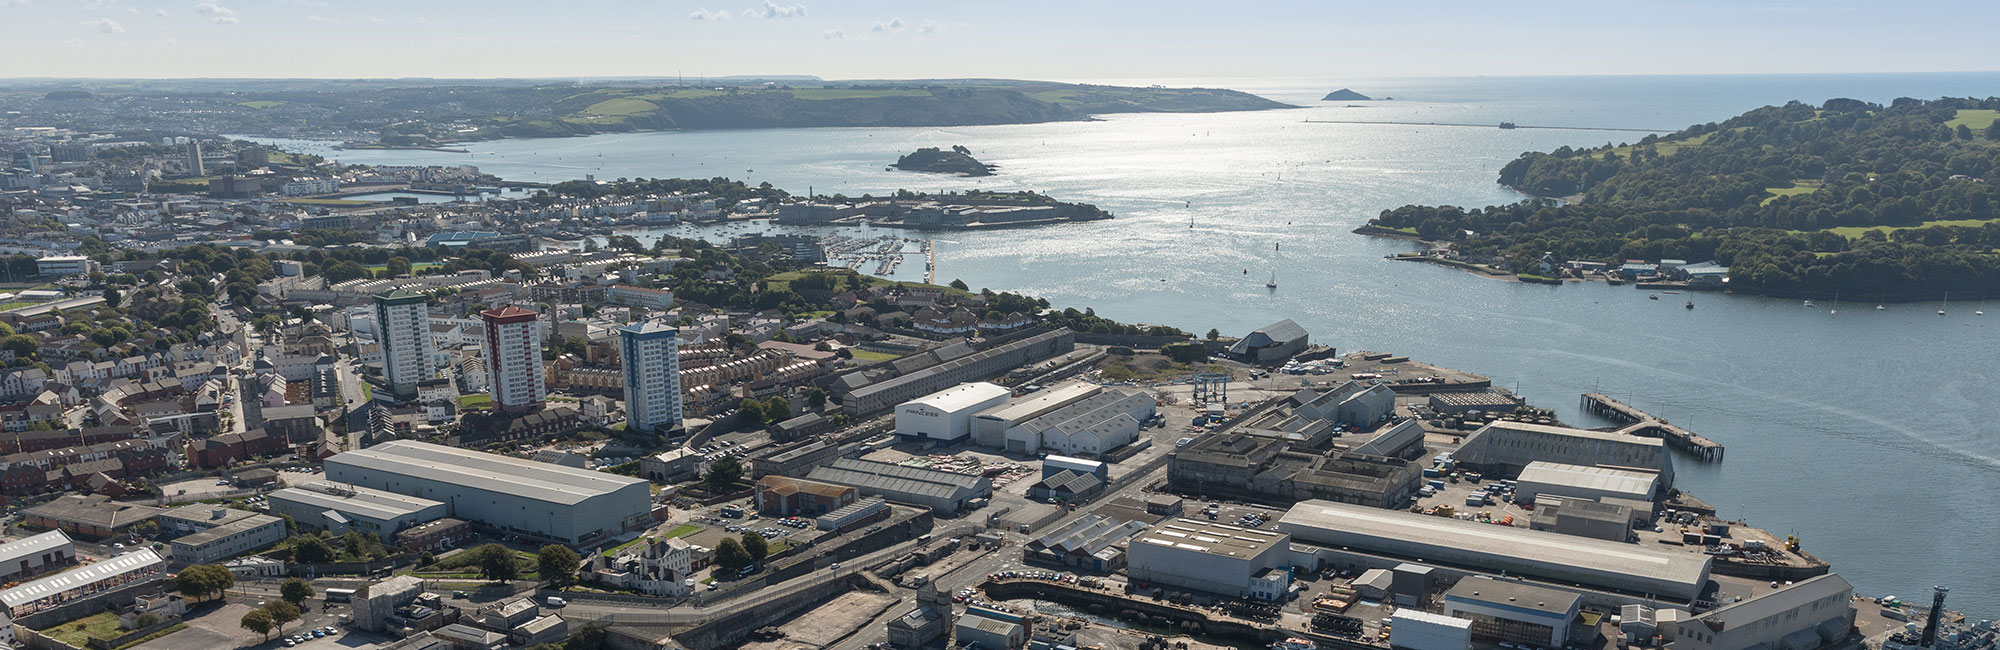 Aerial view of Devonport dockyard in Plymouth